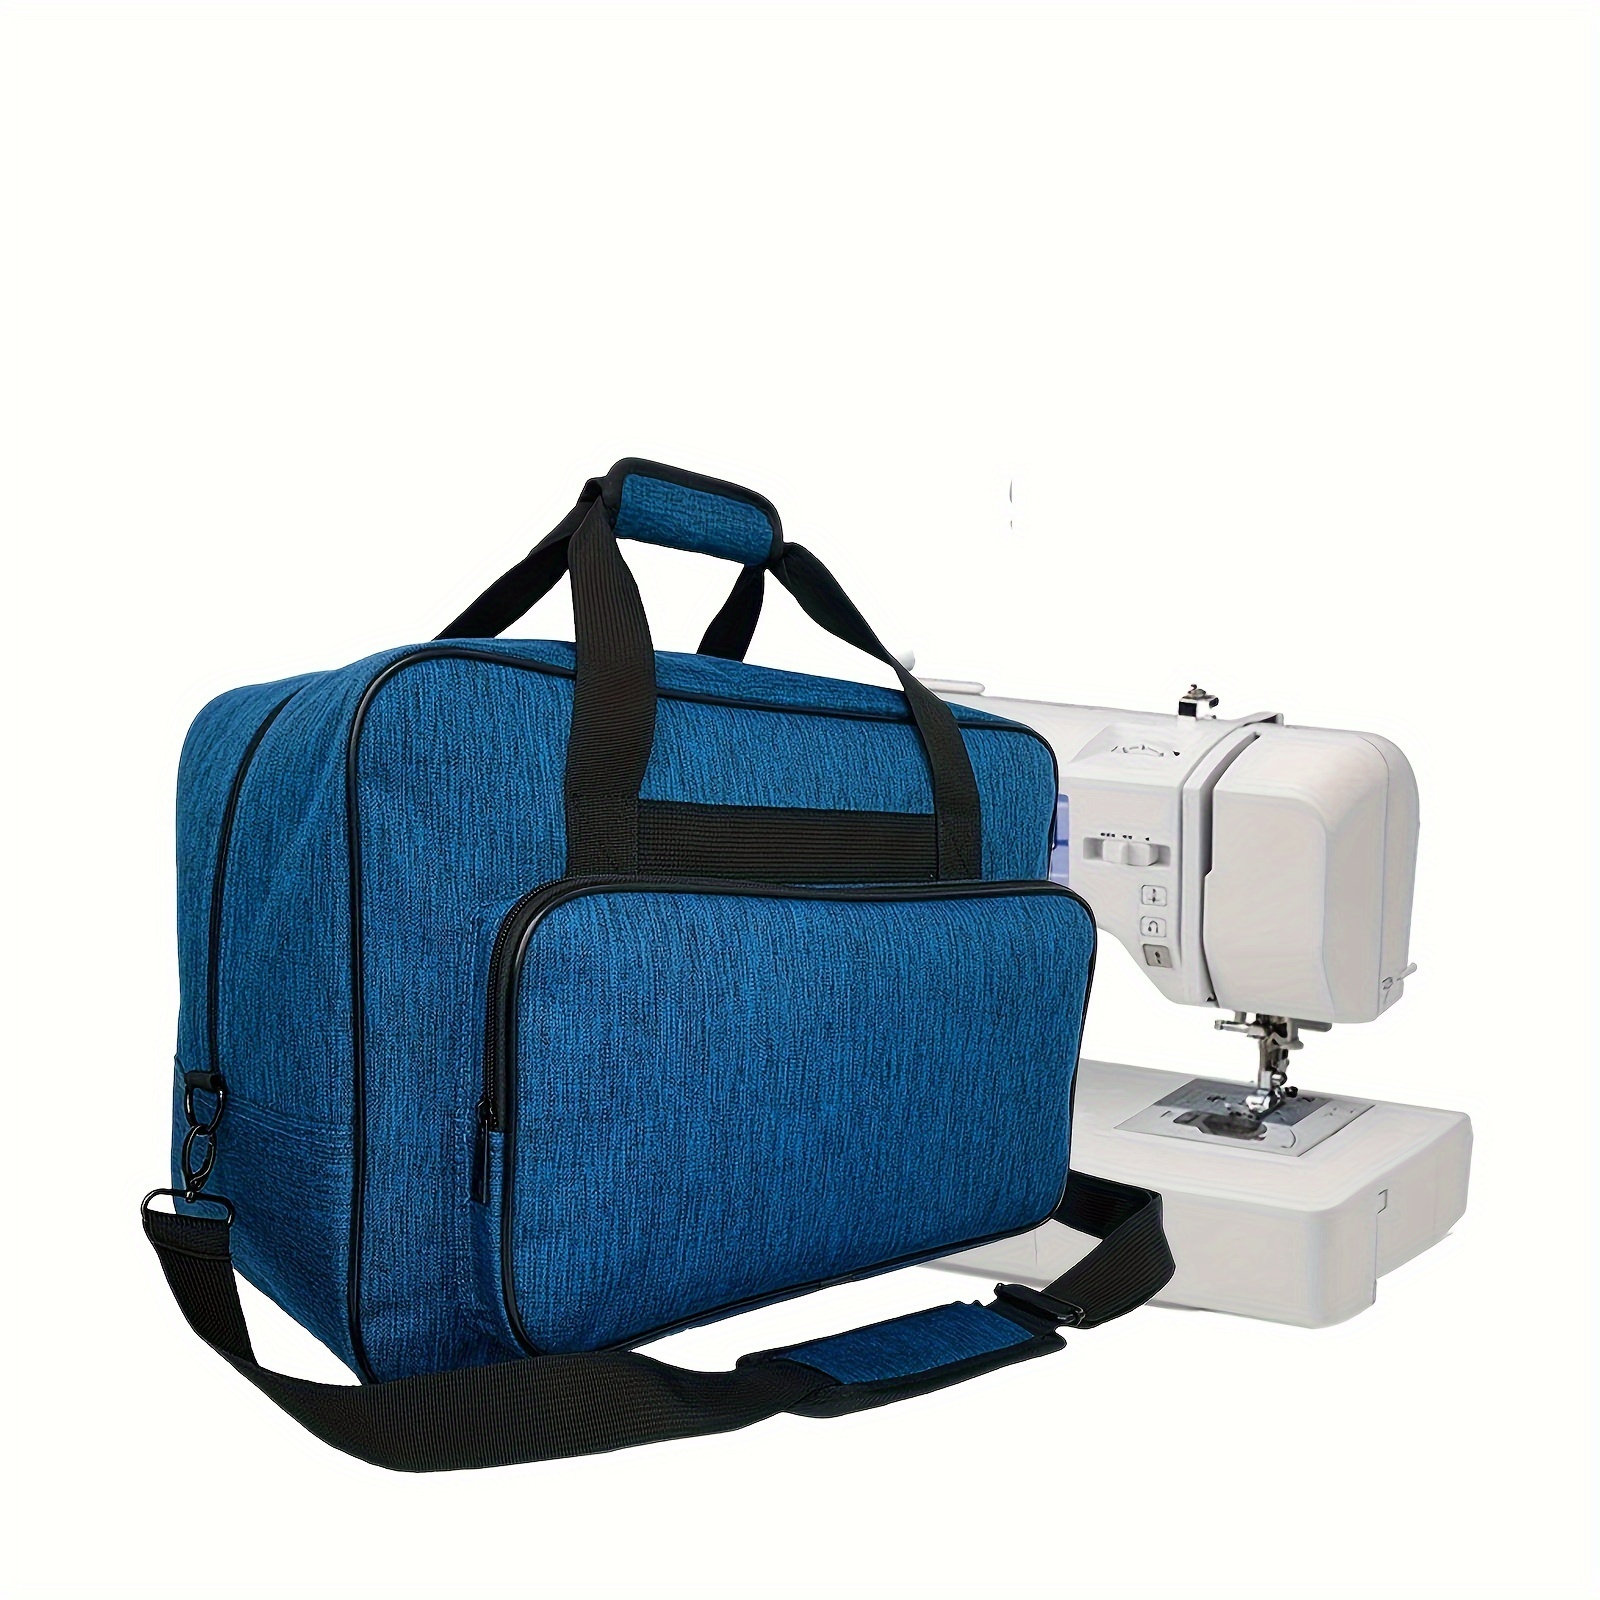 Bolsa para transportar maquina de coser y para viaje